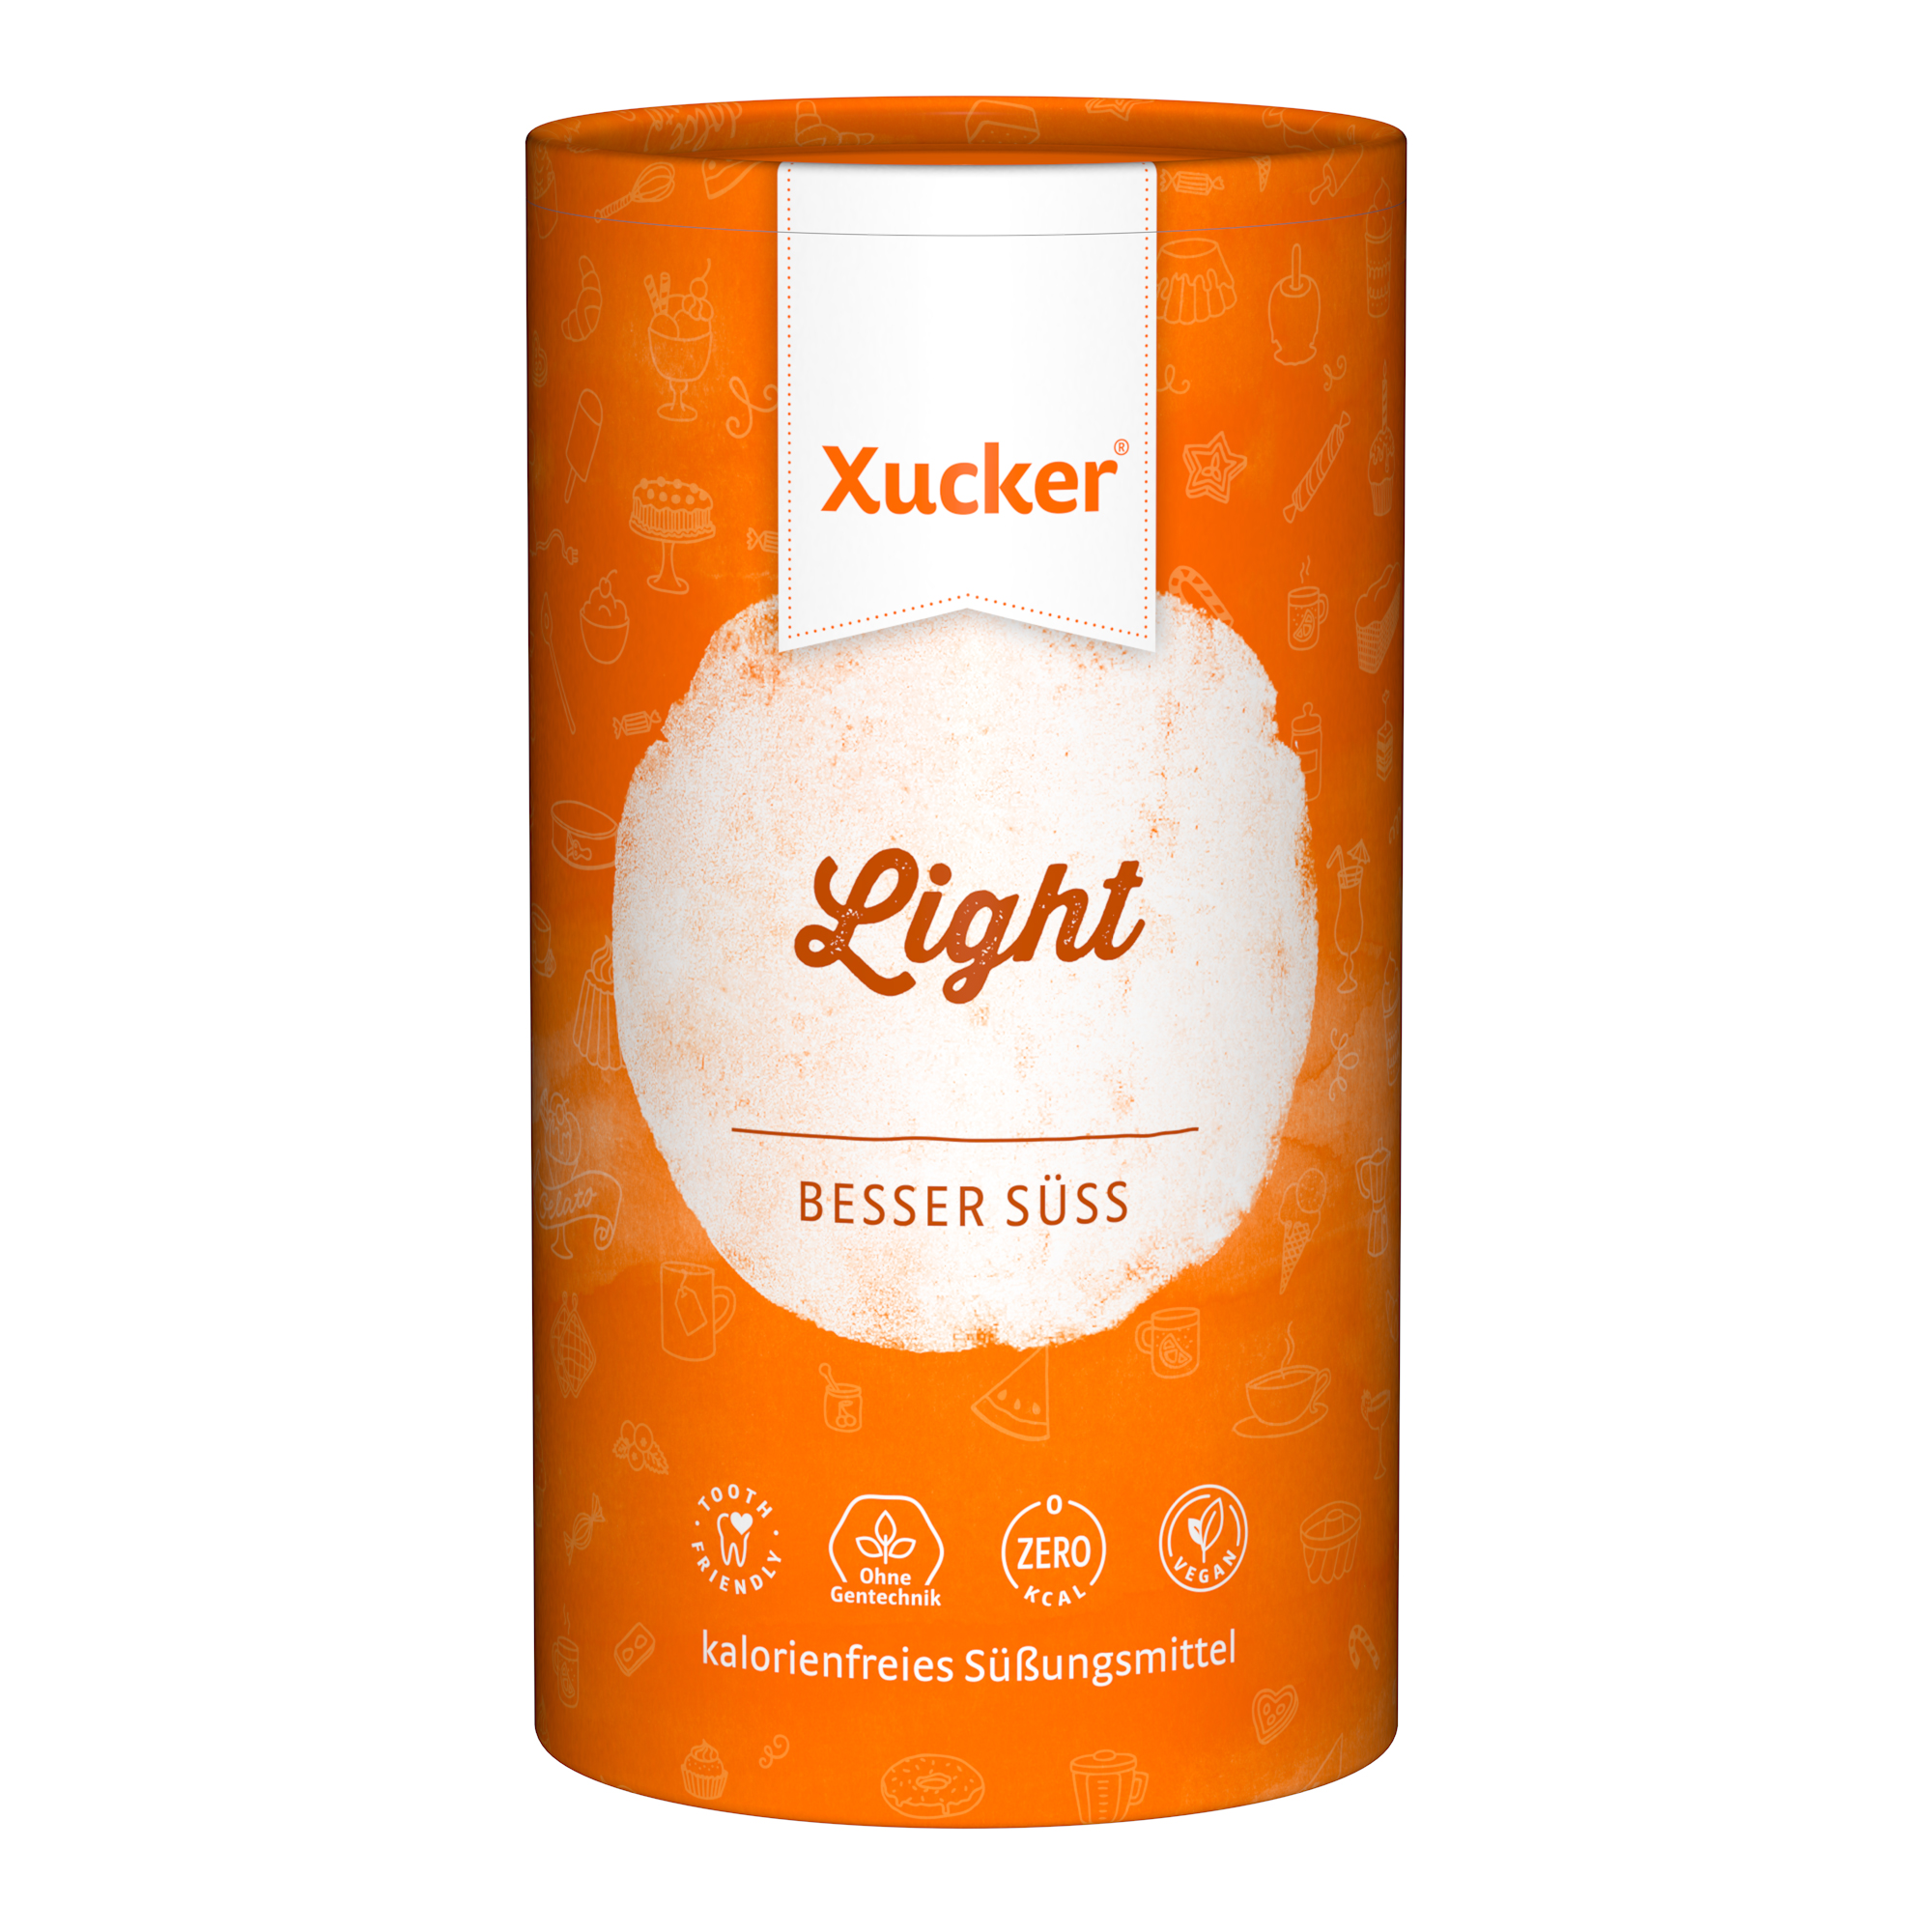 Xucker Light (Erythrit)